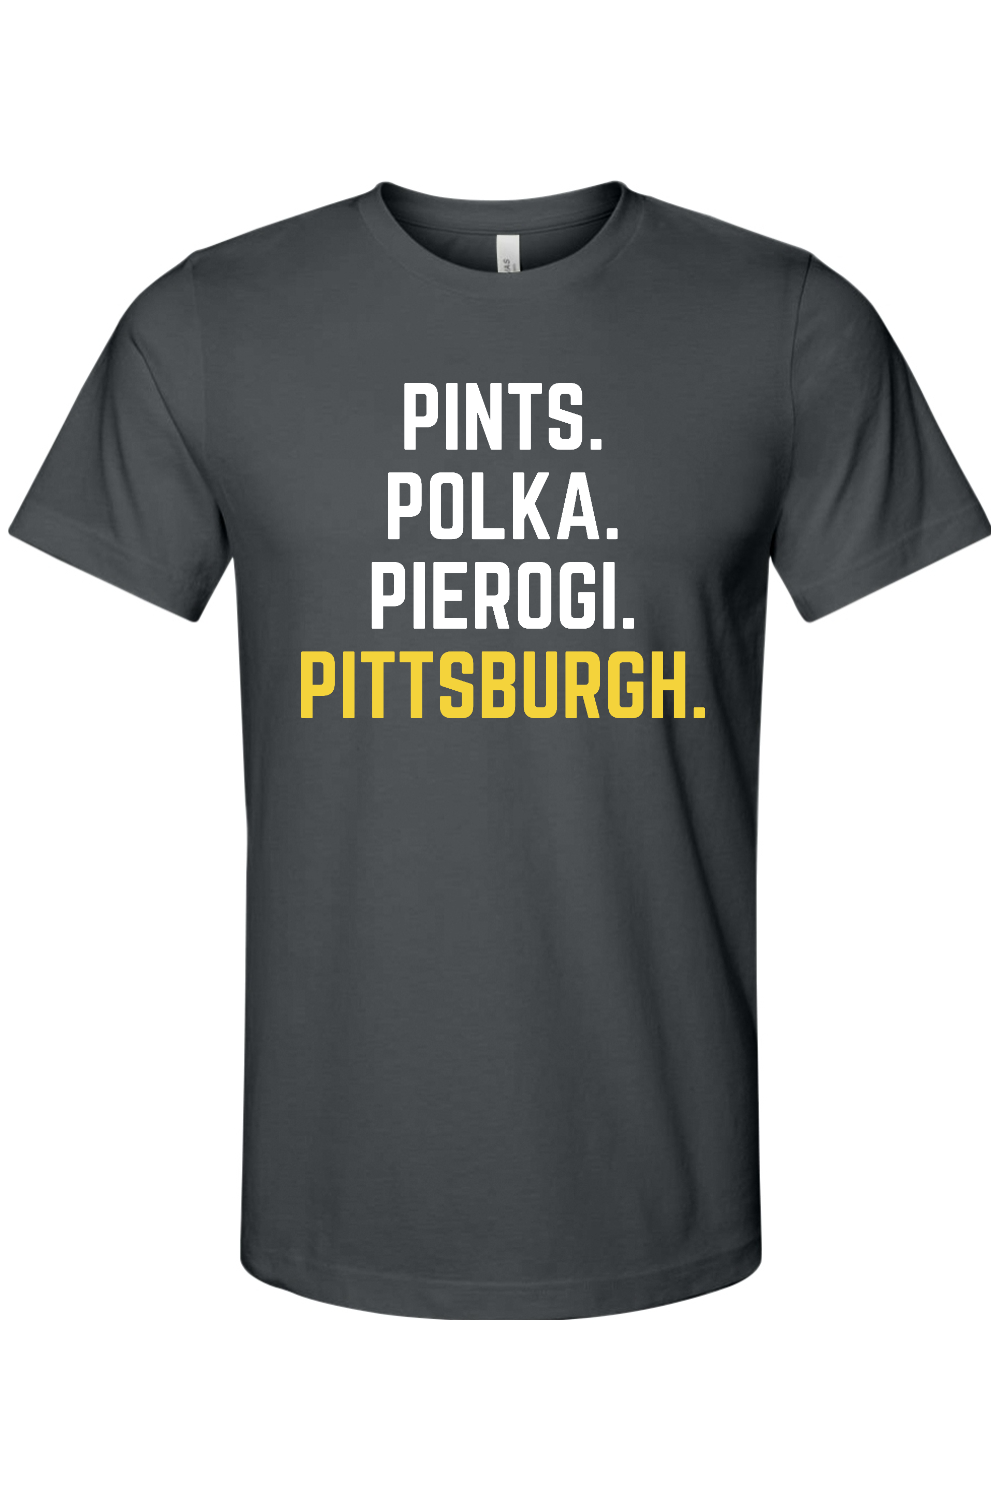 Pittsburgh Pierogi T-Shirts for Sale